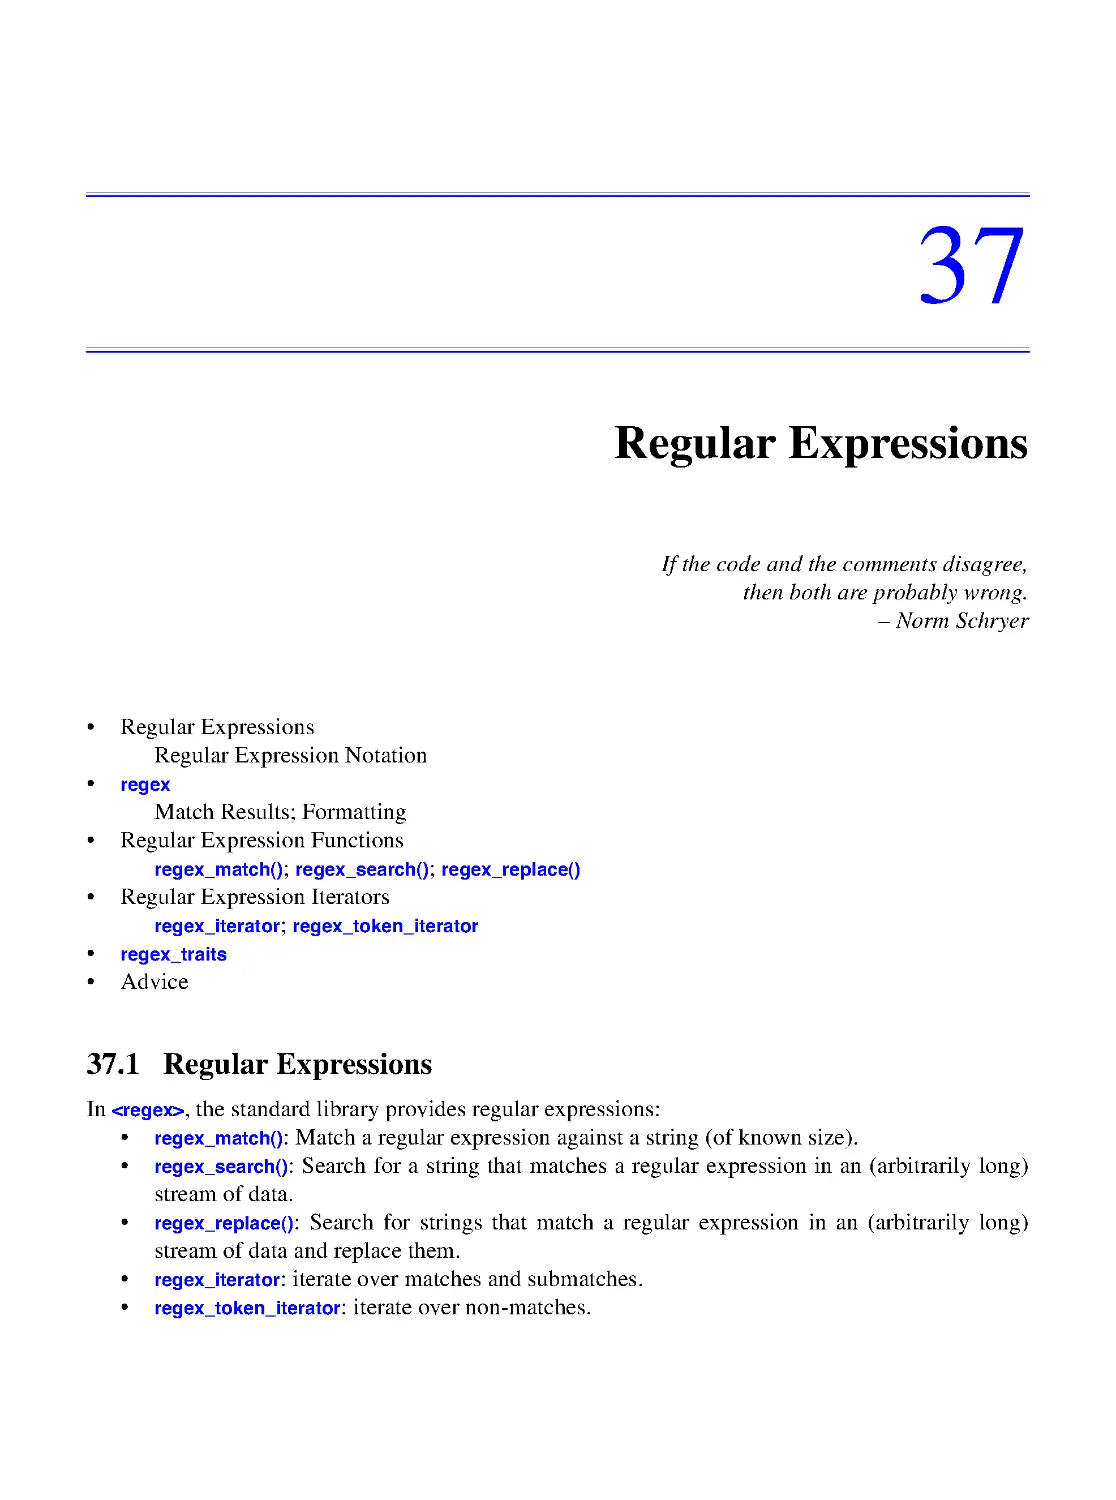 37. Regular Expressions